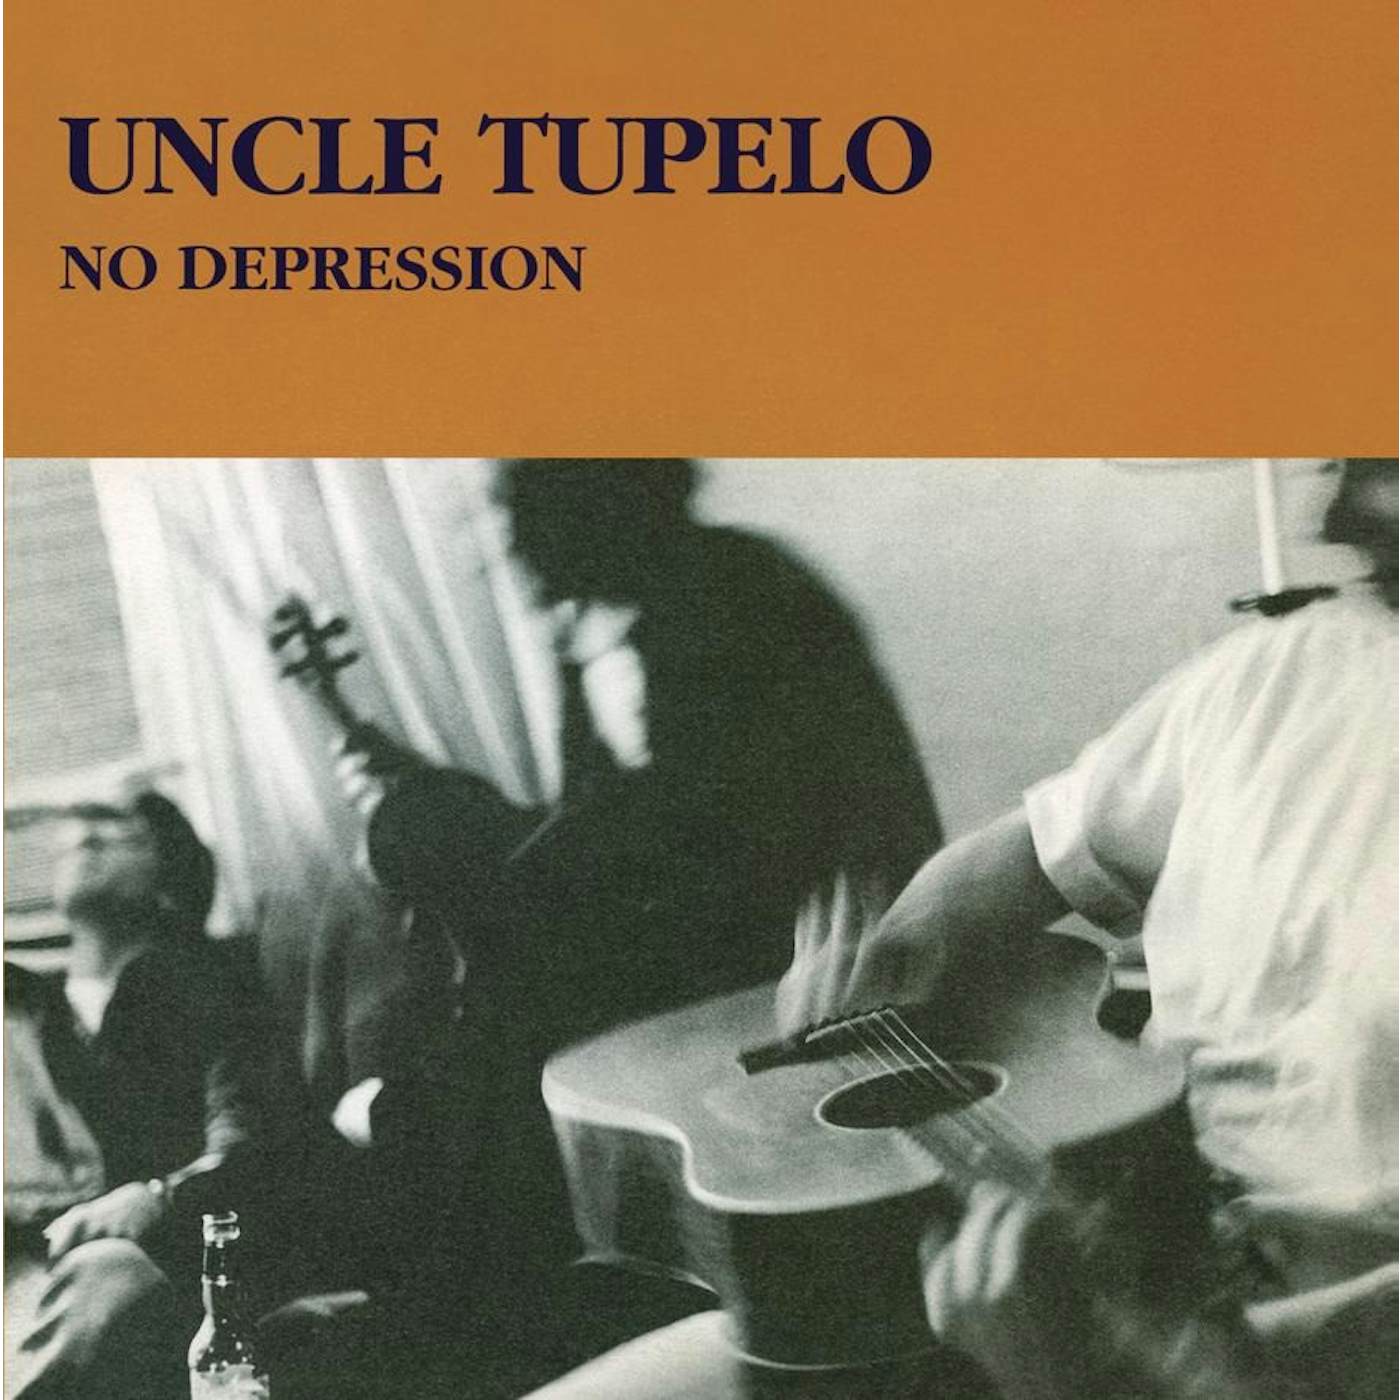 Uncle Tupelo NO DEPRESSION Vinyl Record - 180 Gram Pressing